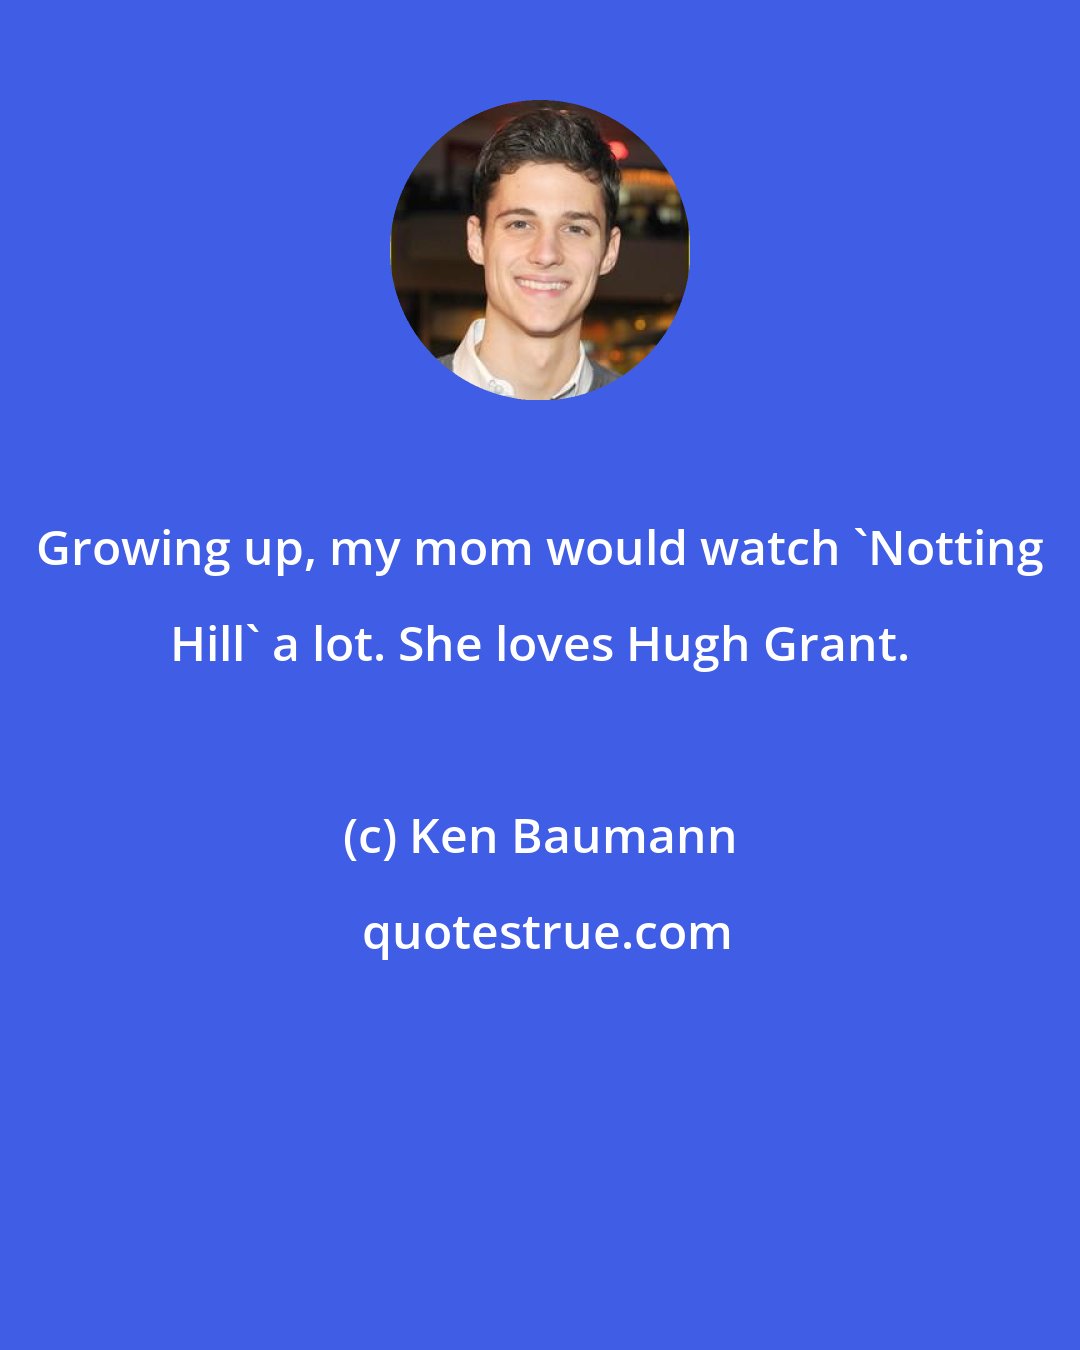 Ken Baumann: Growing up, my mom would watch 'Notting Hill' a lot. She loves Hugh Grant.